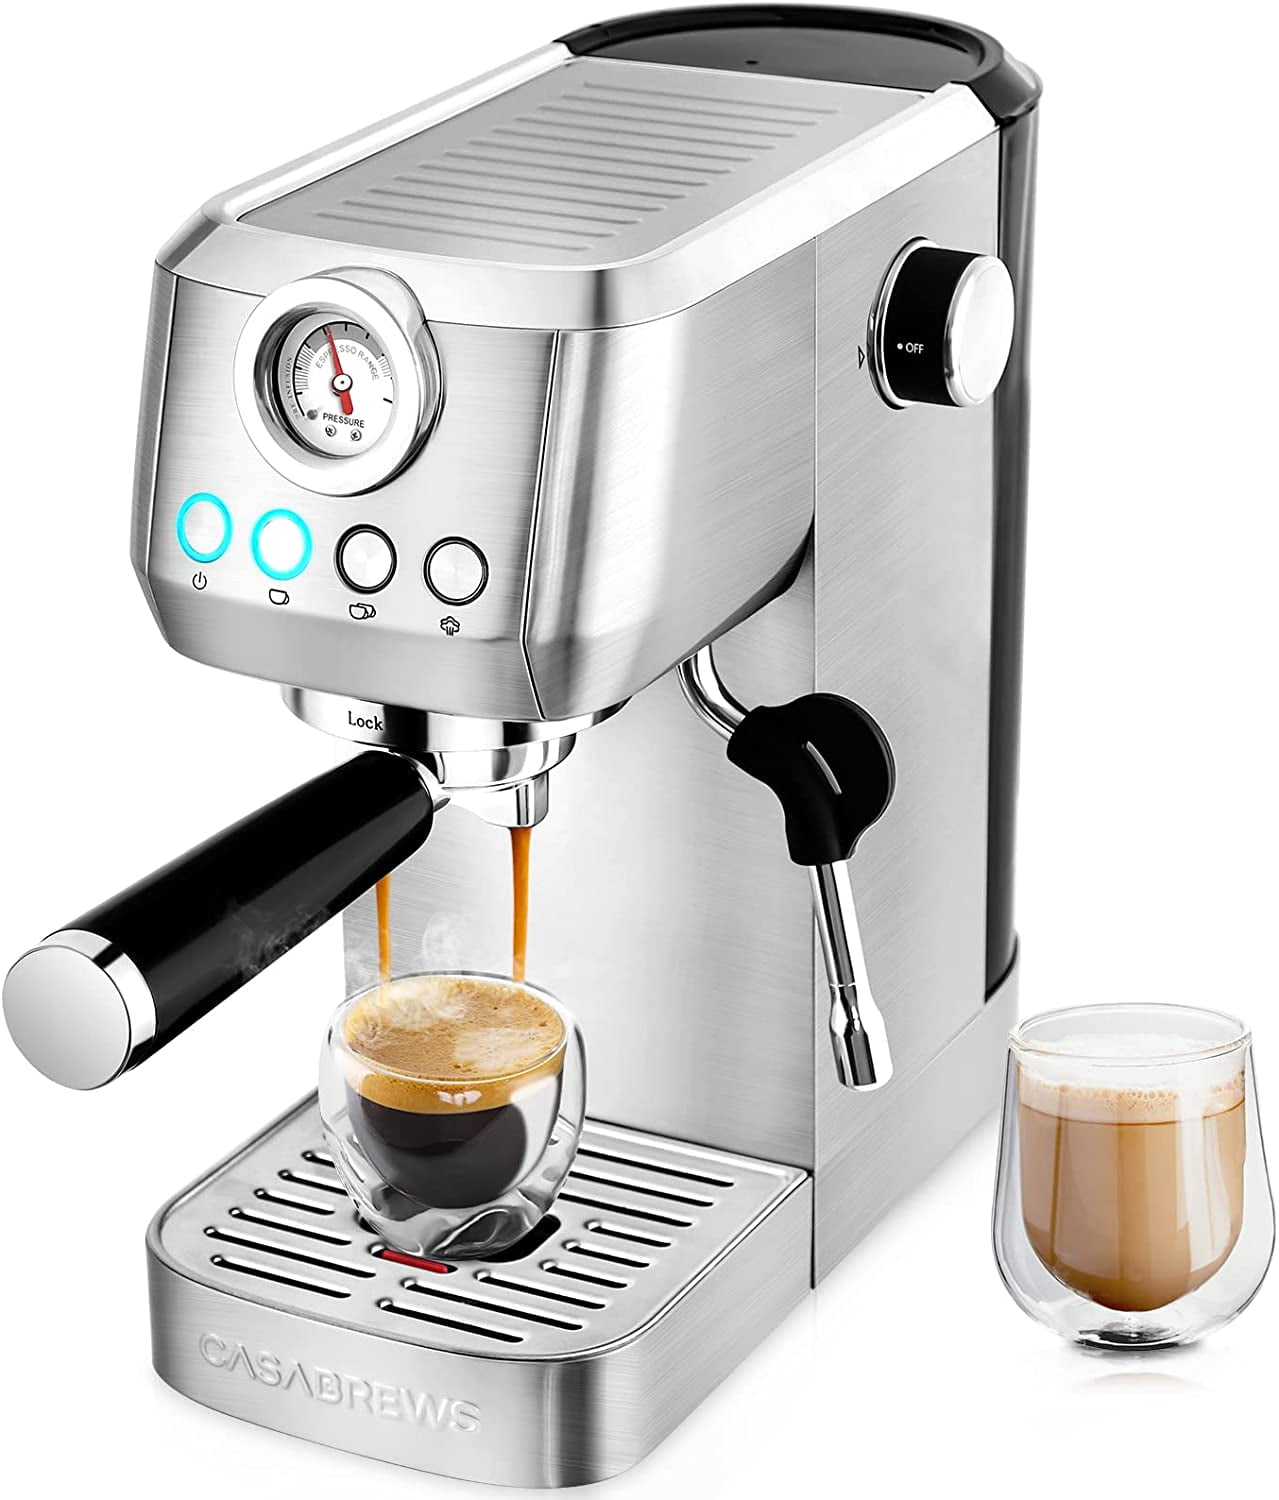 EspressoWorks Barista Pro Series Espresso Machine with LCD Display Milk  Steamer and Grinder u2013 Ready To Brew In 60 Seconds u2013 15-Bar Espresso  Cappuccino and Latte Machine 30-P 